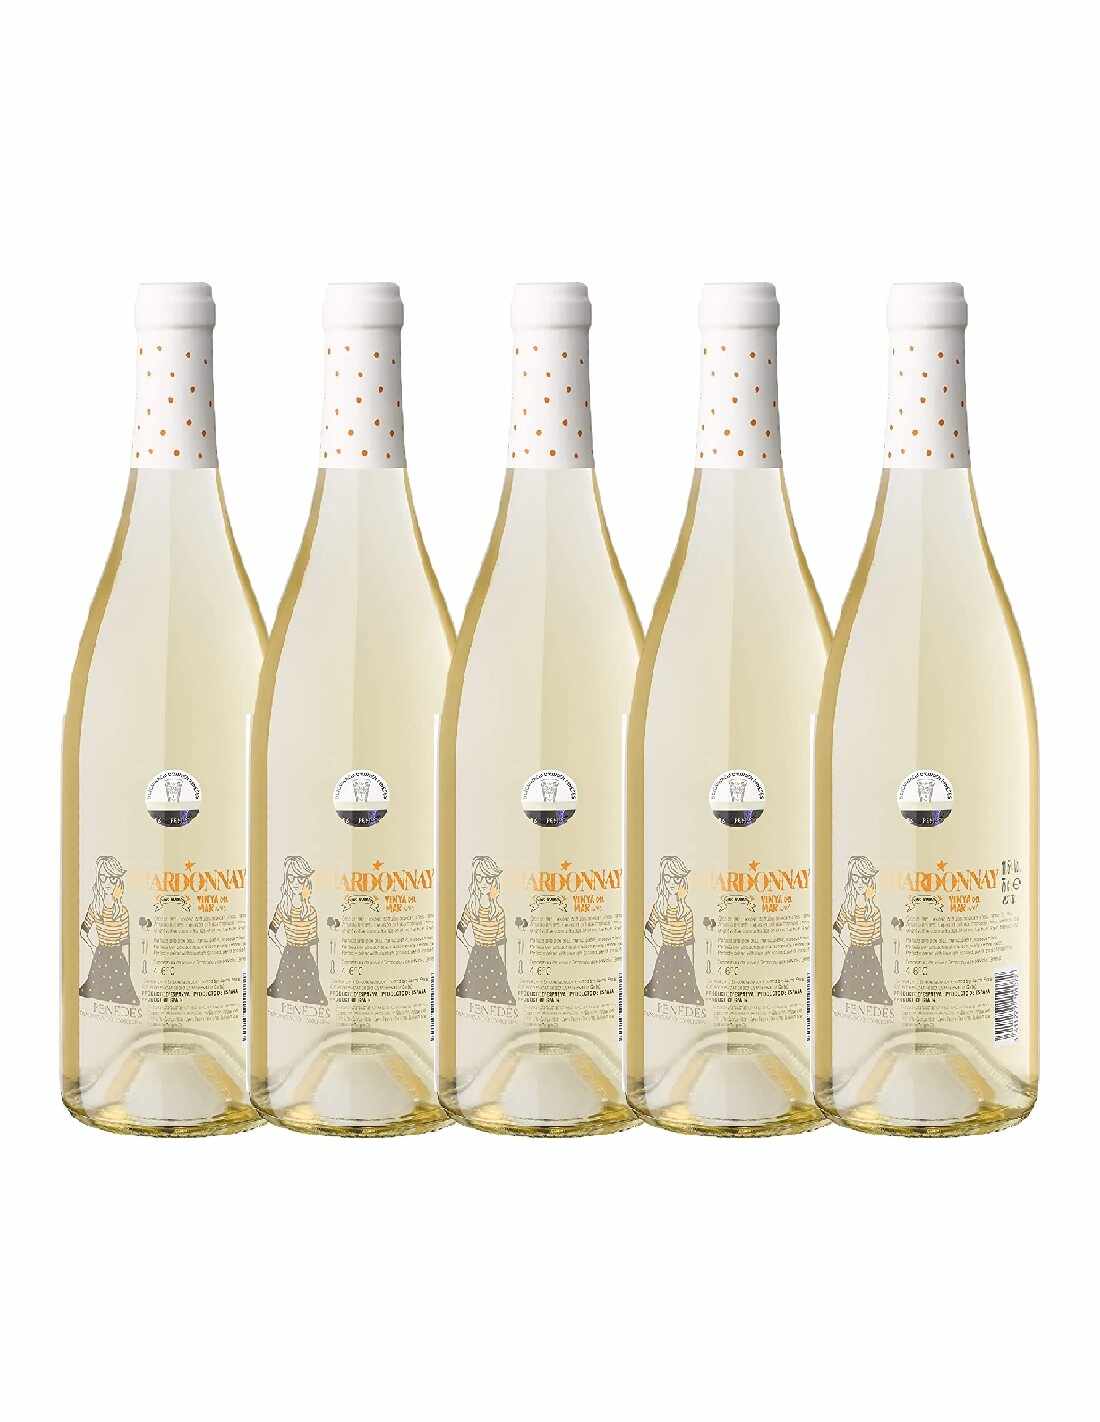 Pachet 5 sticle Vin alb, Chardonnay, Vinya del Mar, 11.5% alc., 0.75L, Spania